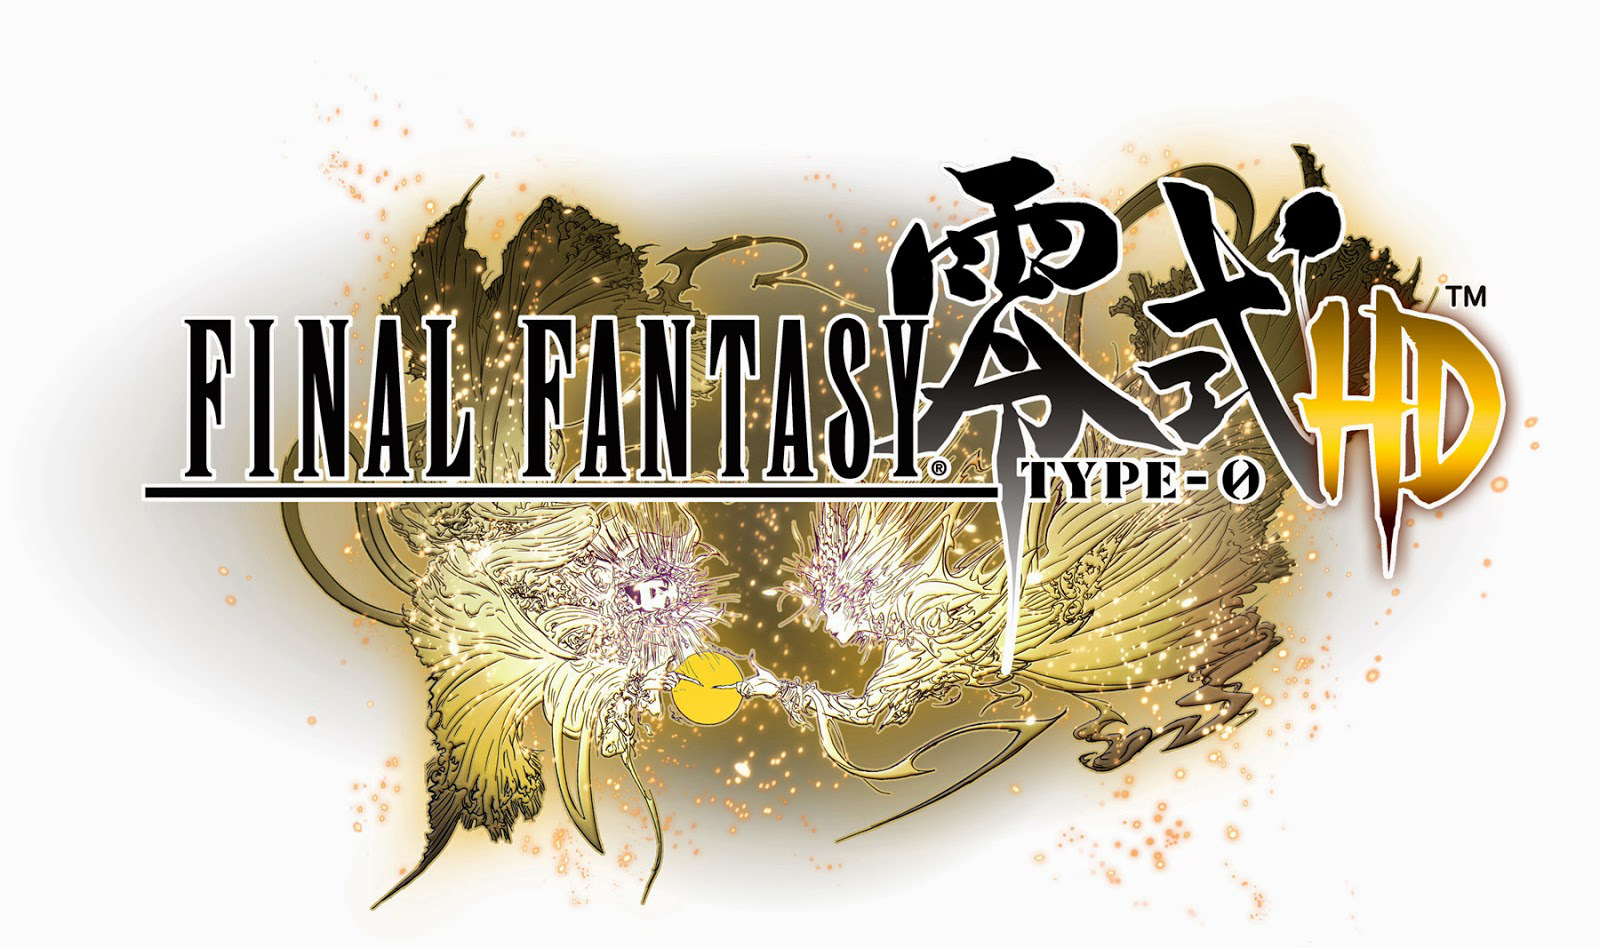 Final Fantasy TYPE-0-HD logo